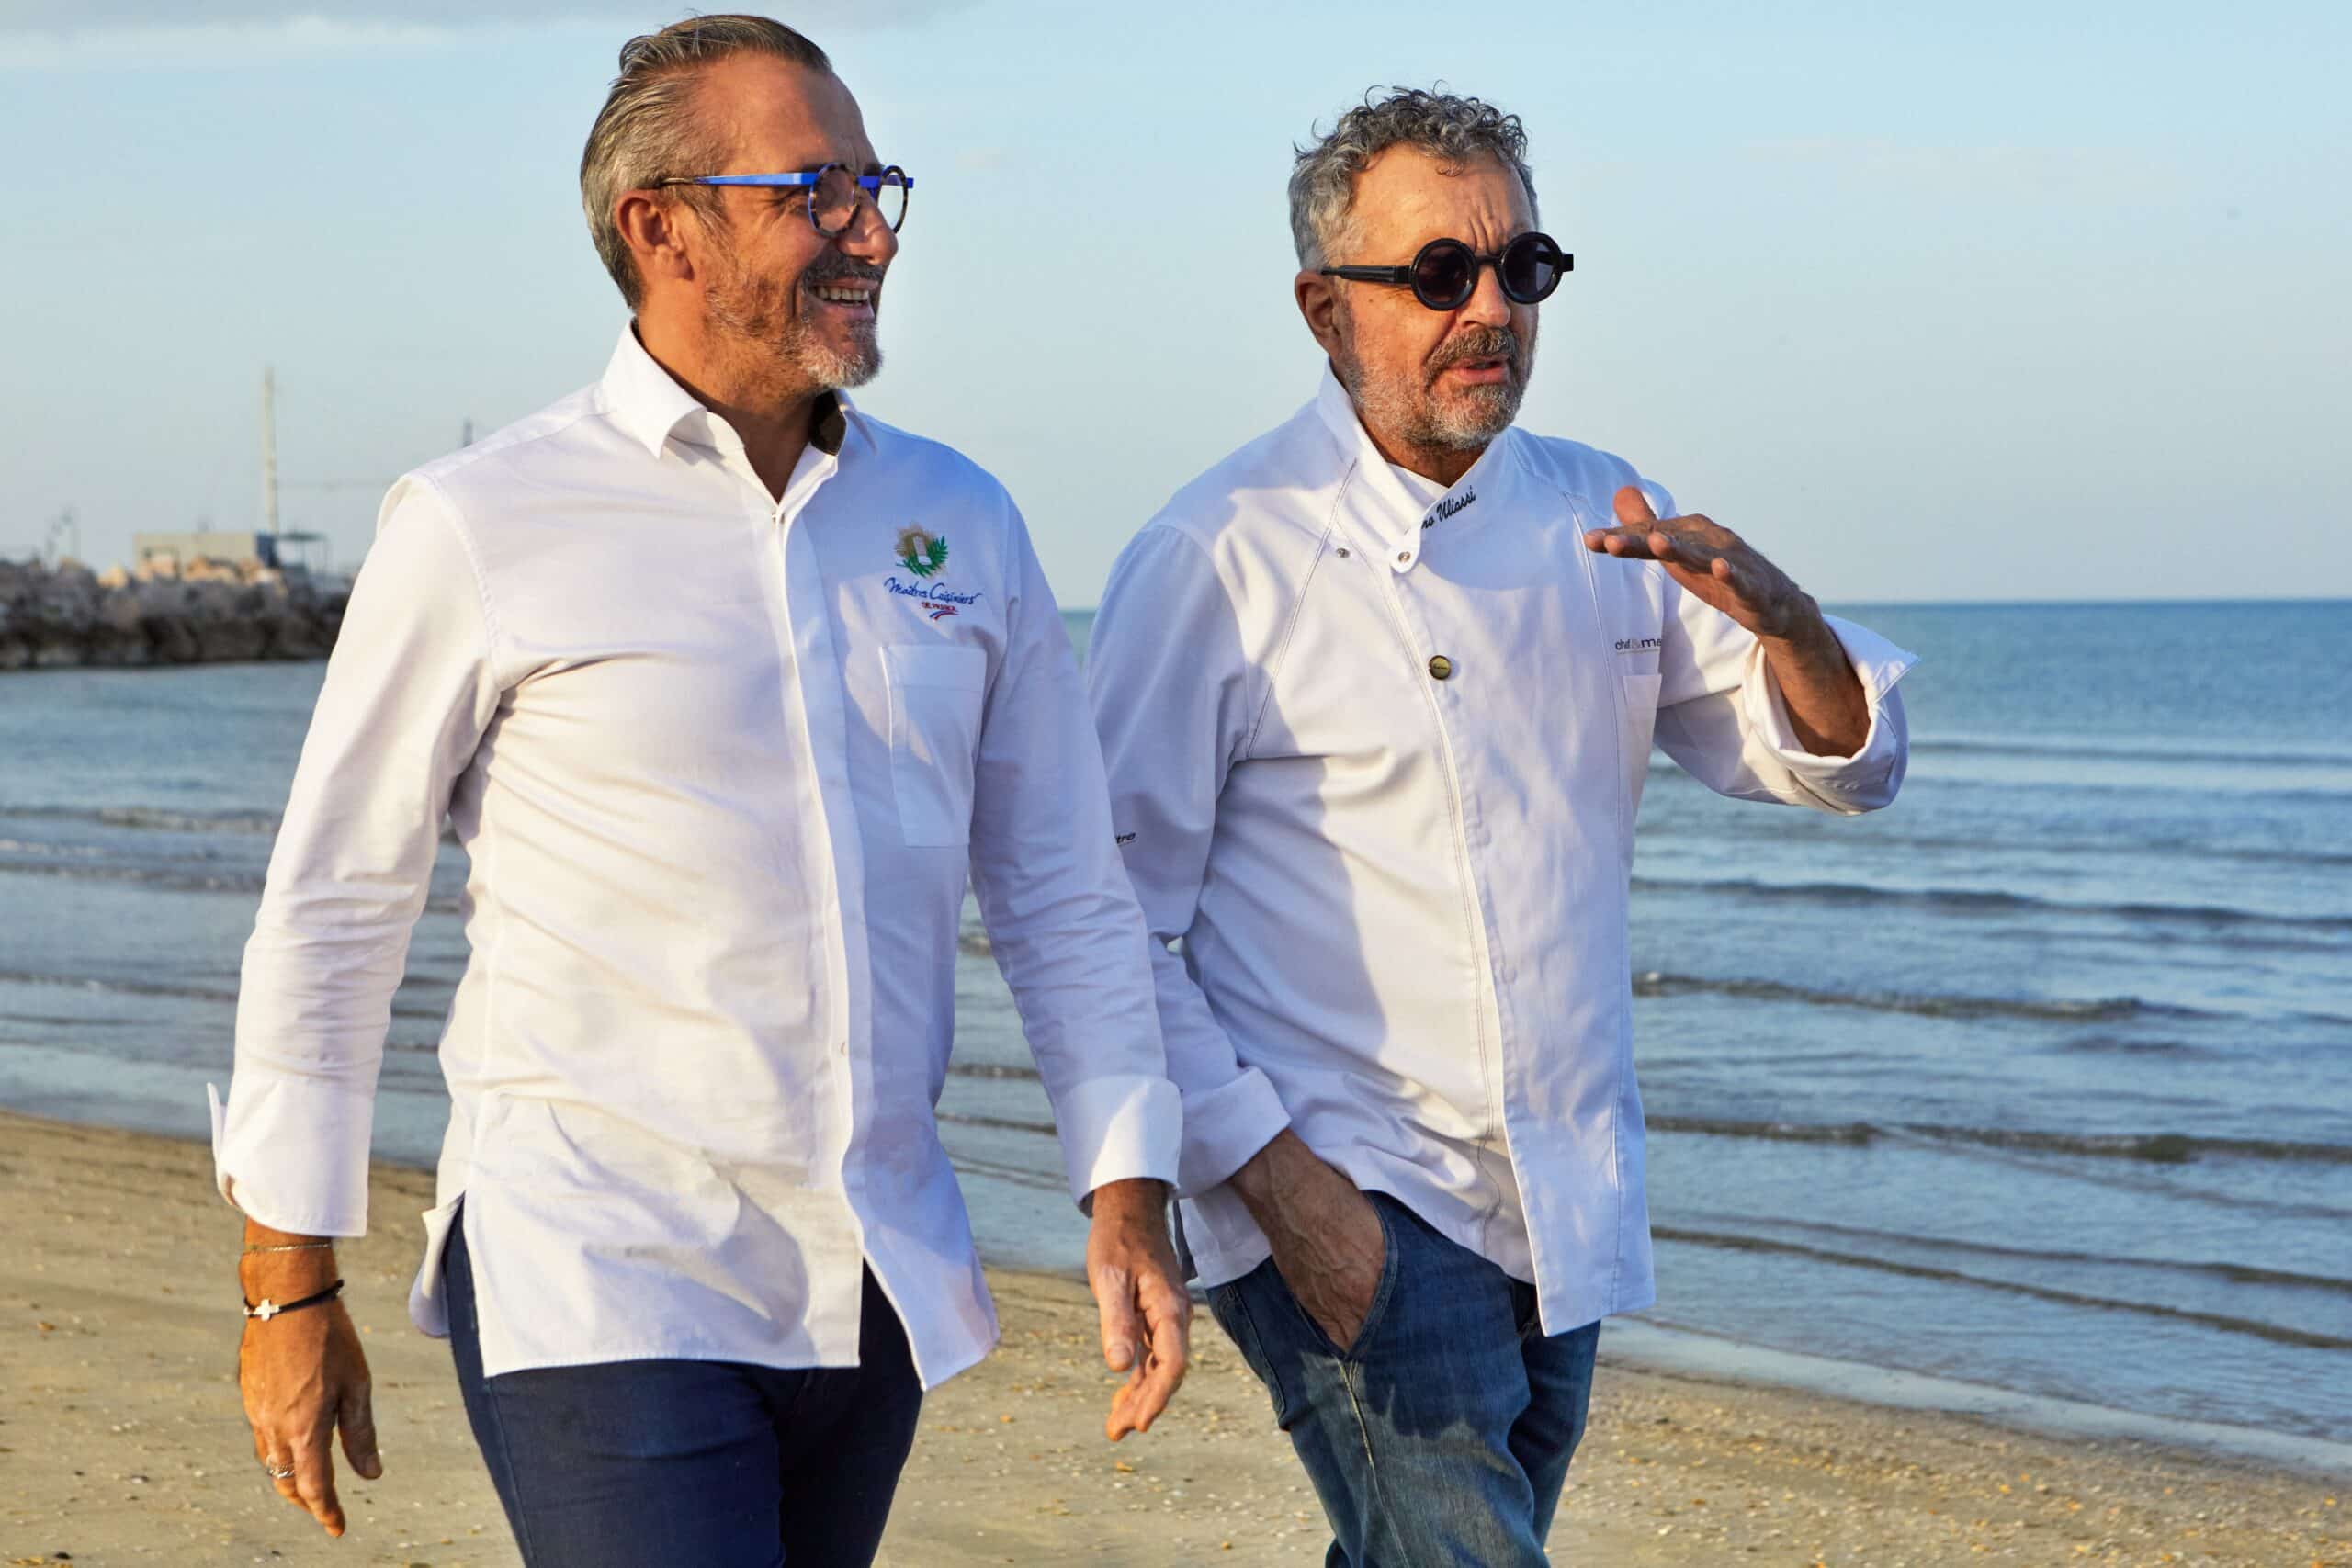 Chefs Frank Garanger & Mauro Uliassi